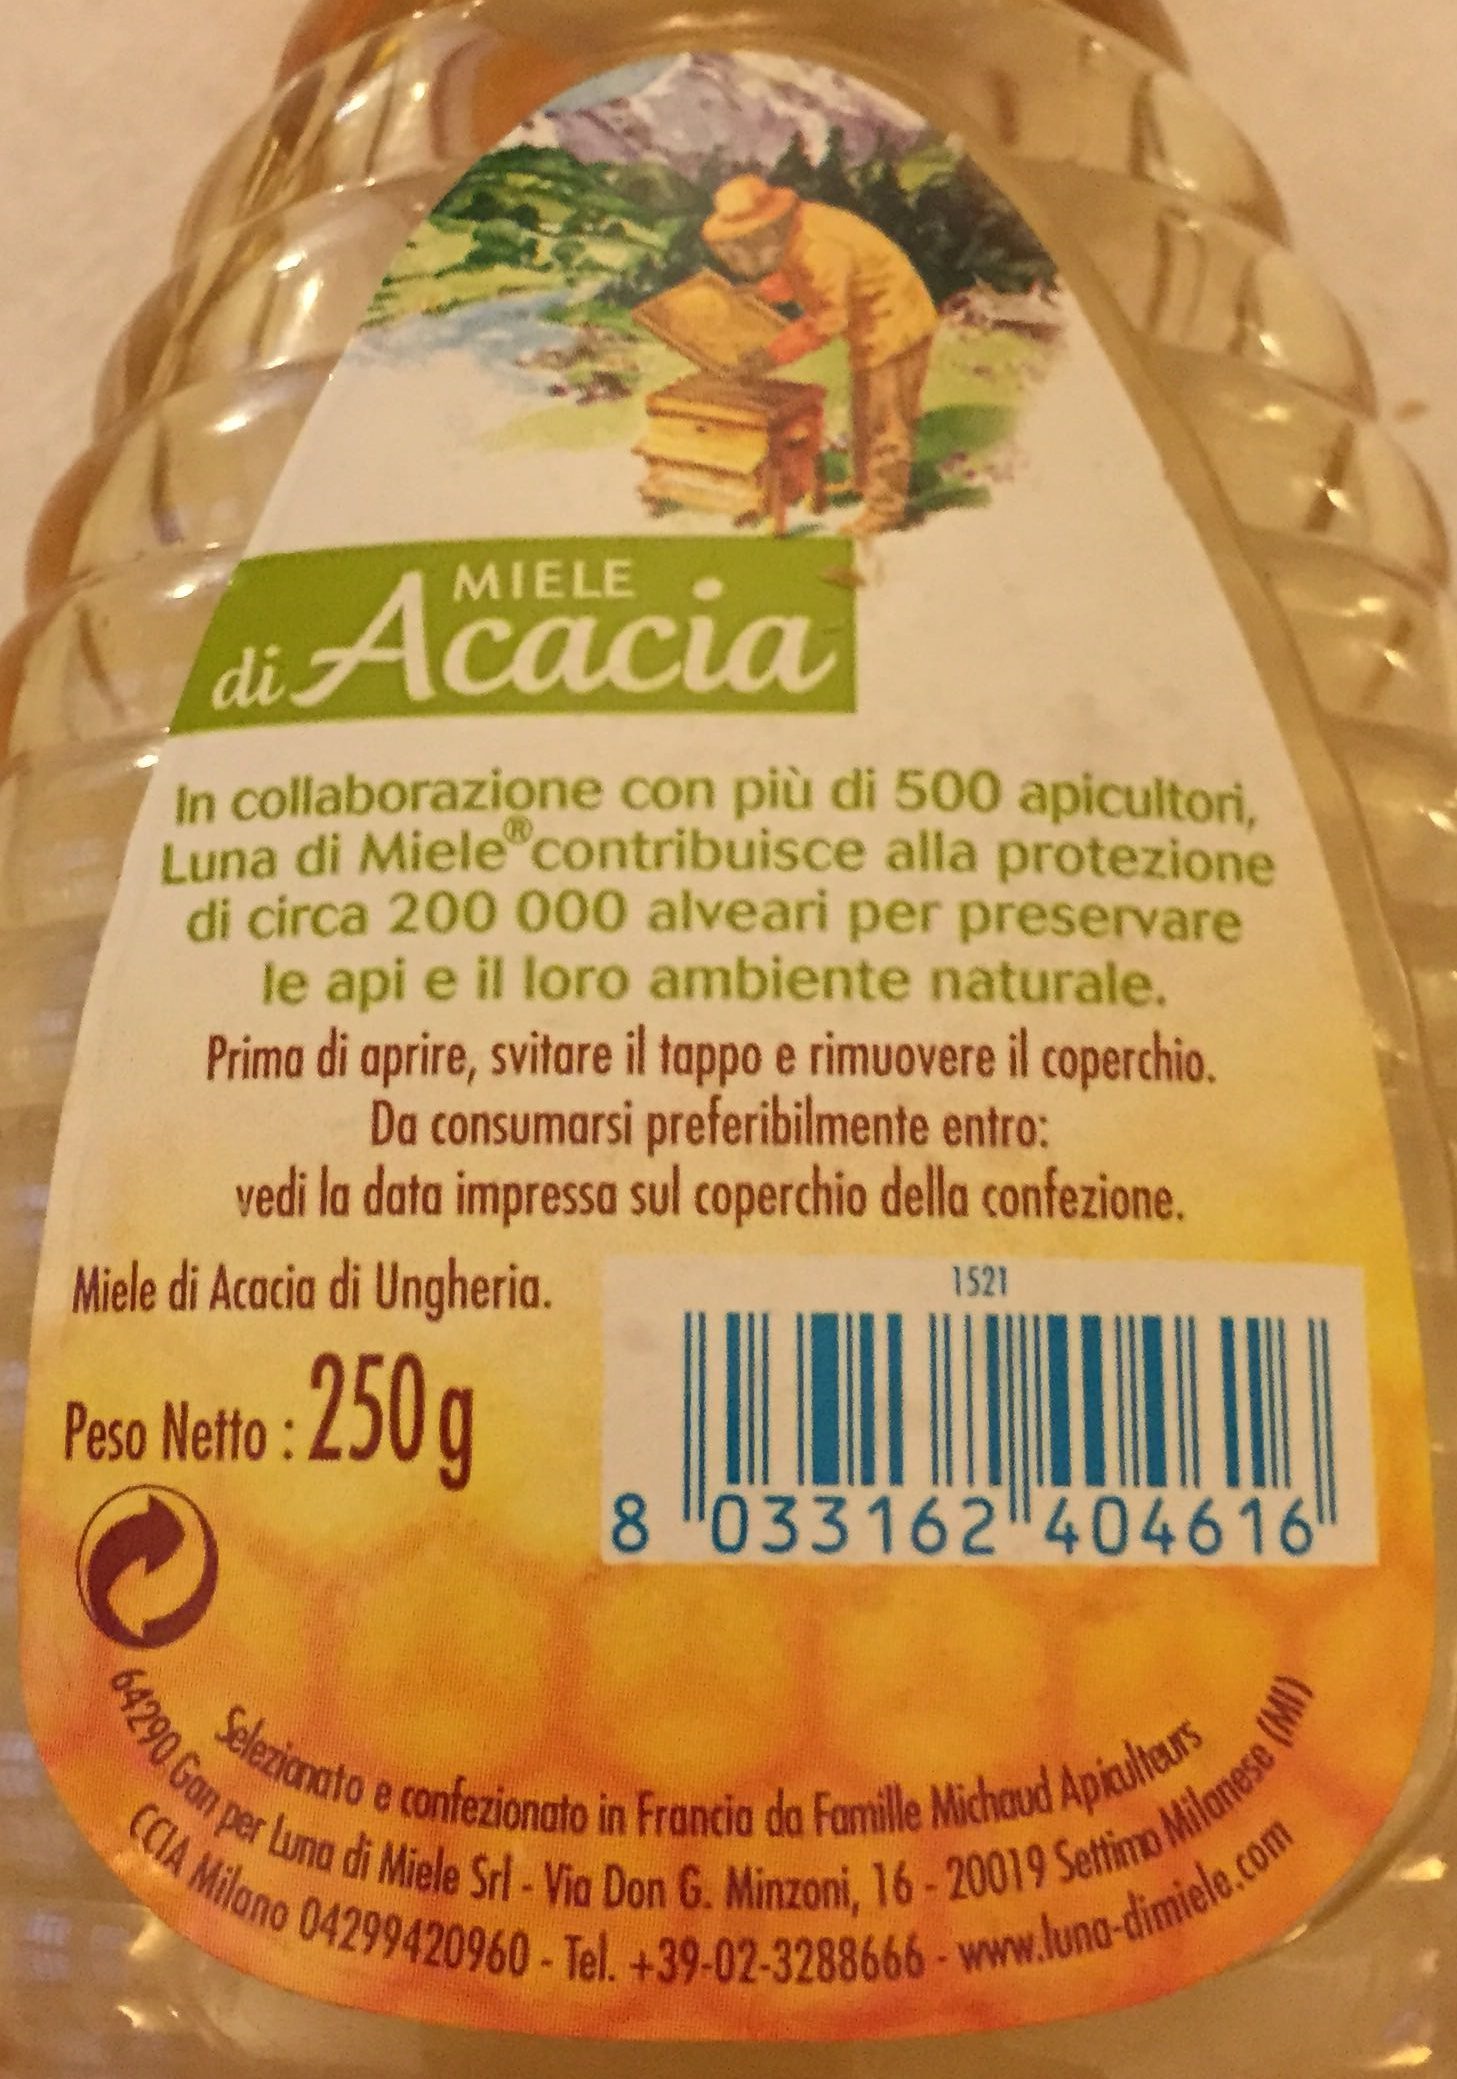 Miele di acacia - Ingredienti - en